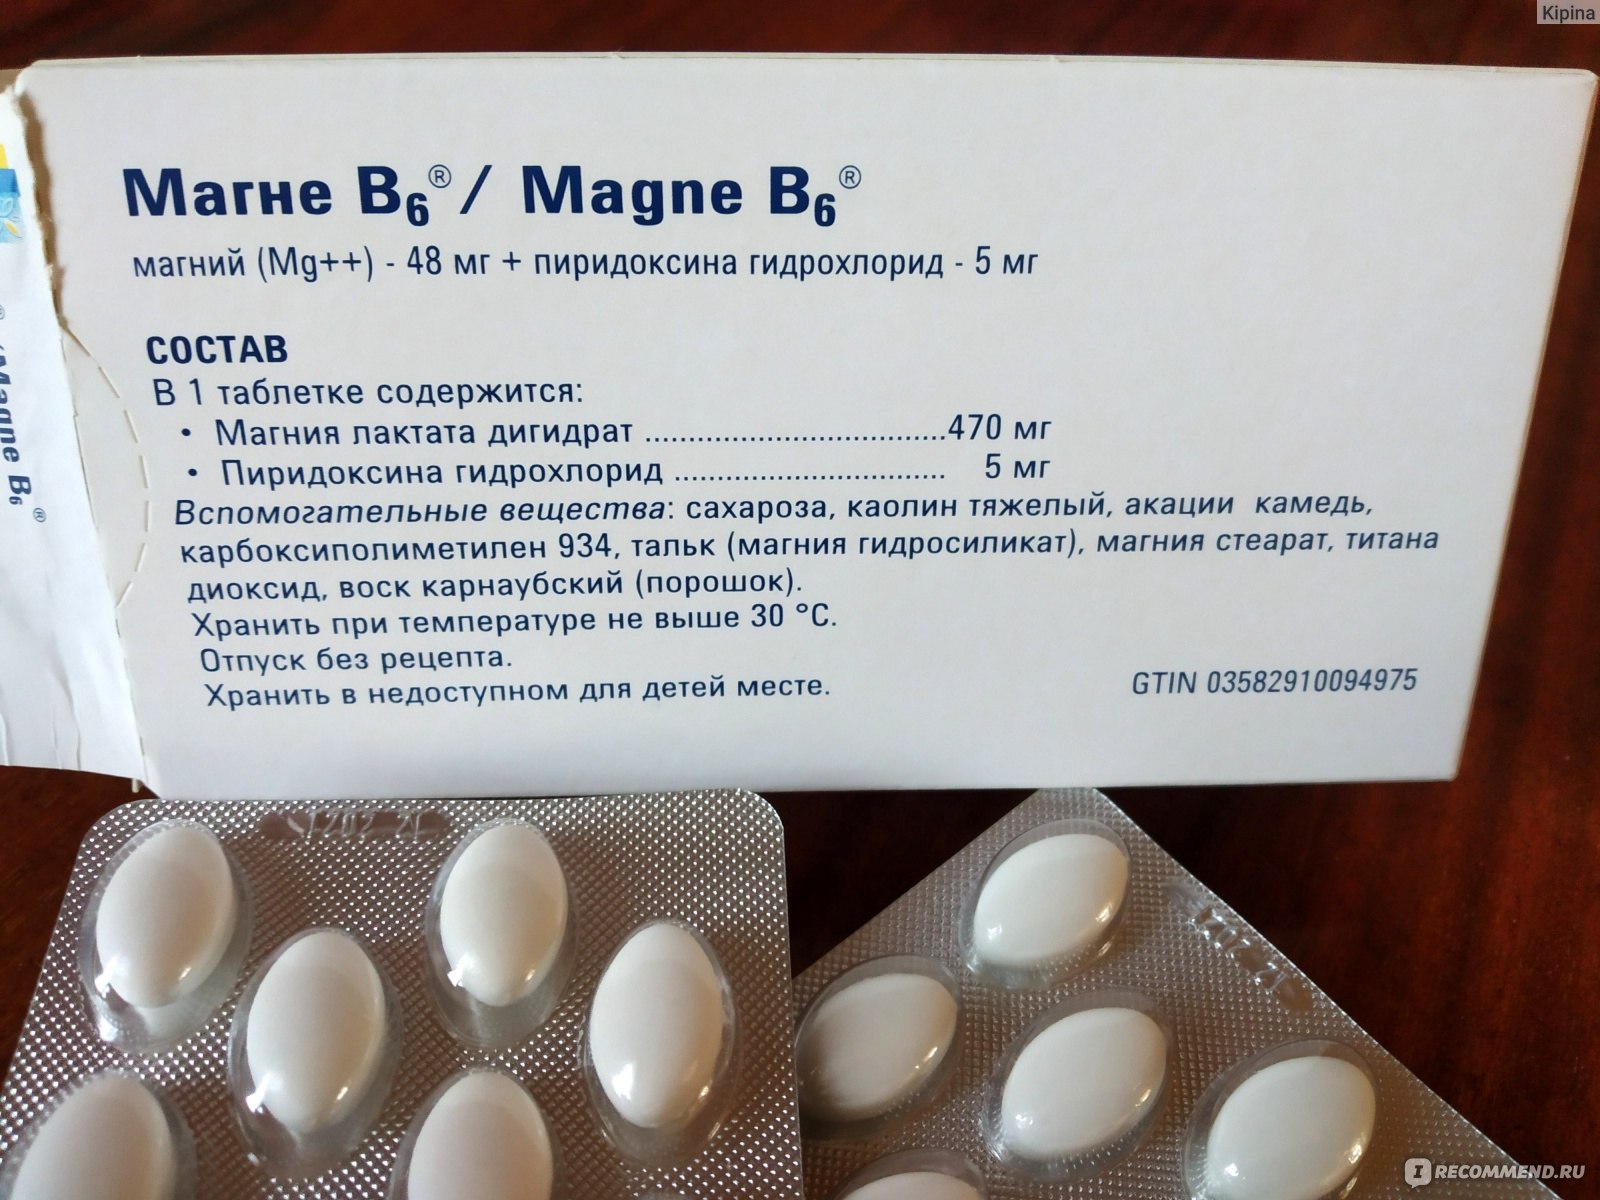 Дозировка б 6. Магне б6 Nutreov. Магне-в6 таблетки. Магний в6 состав таблетки. Магне в6 порошок.